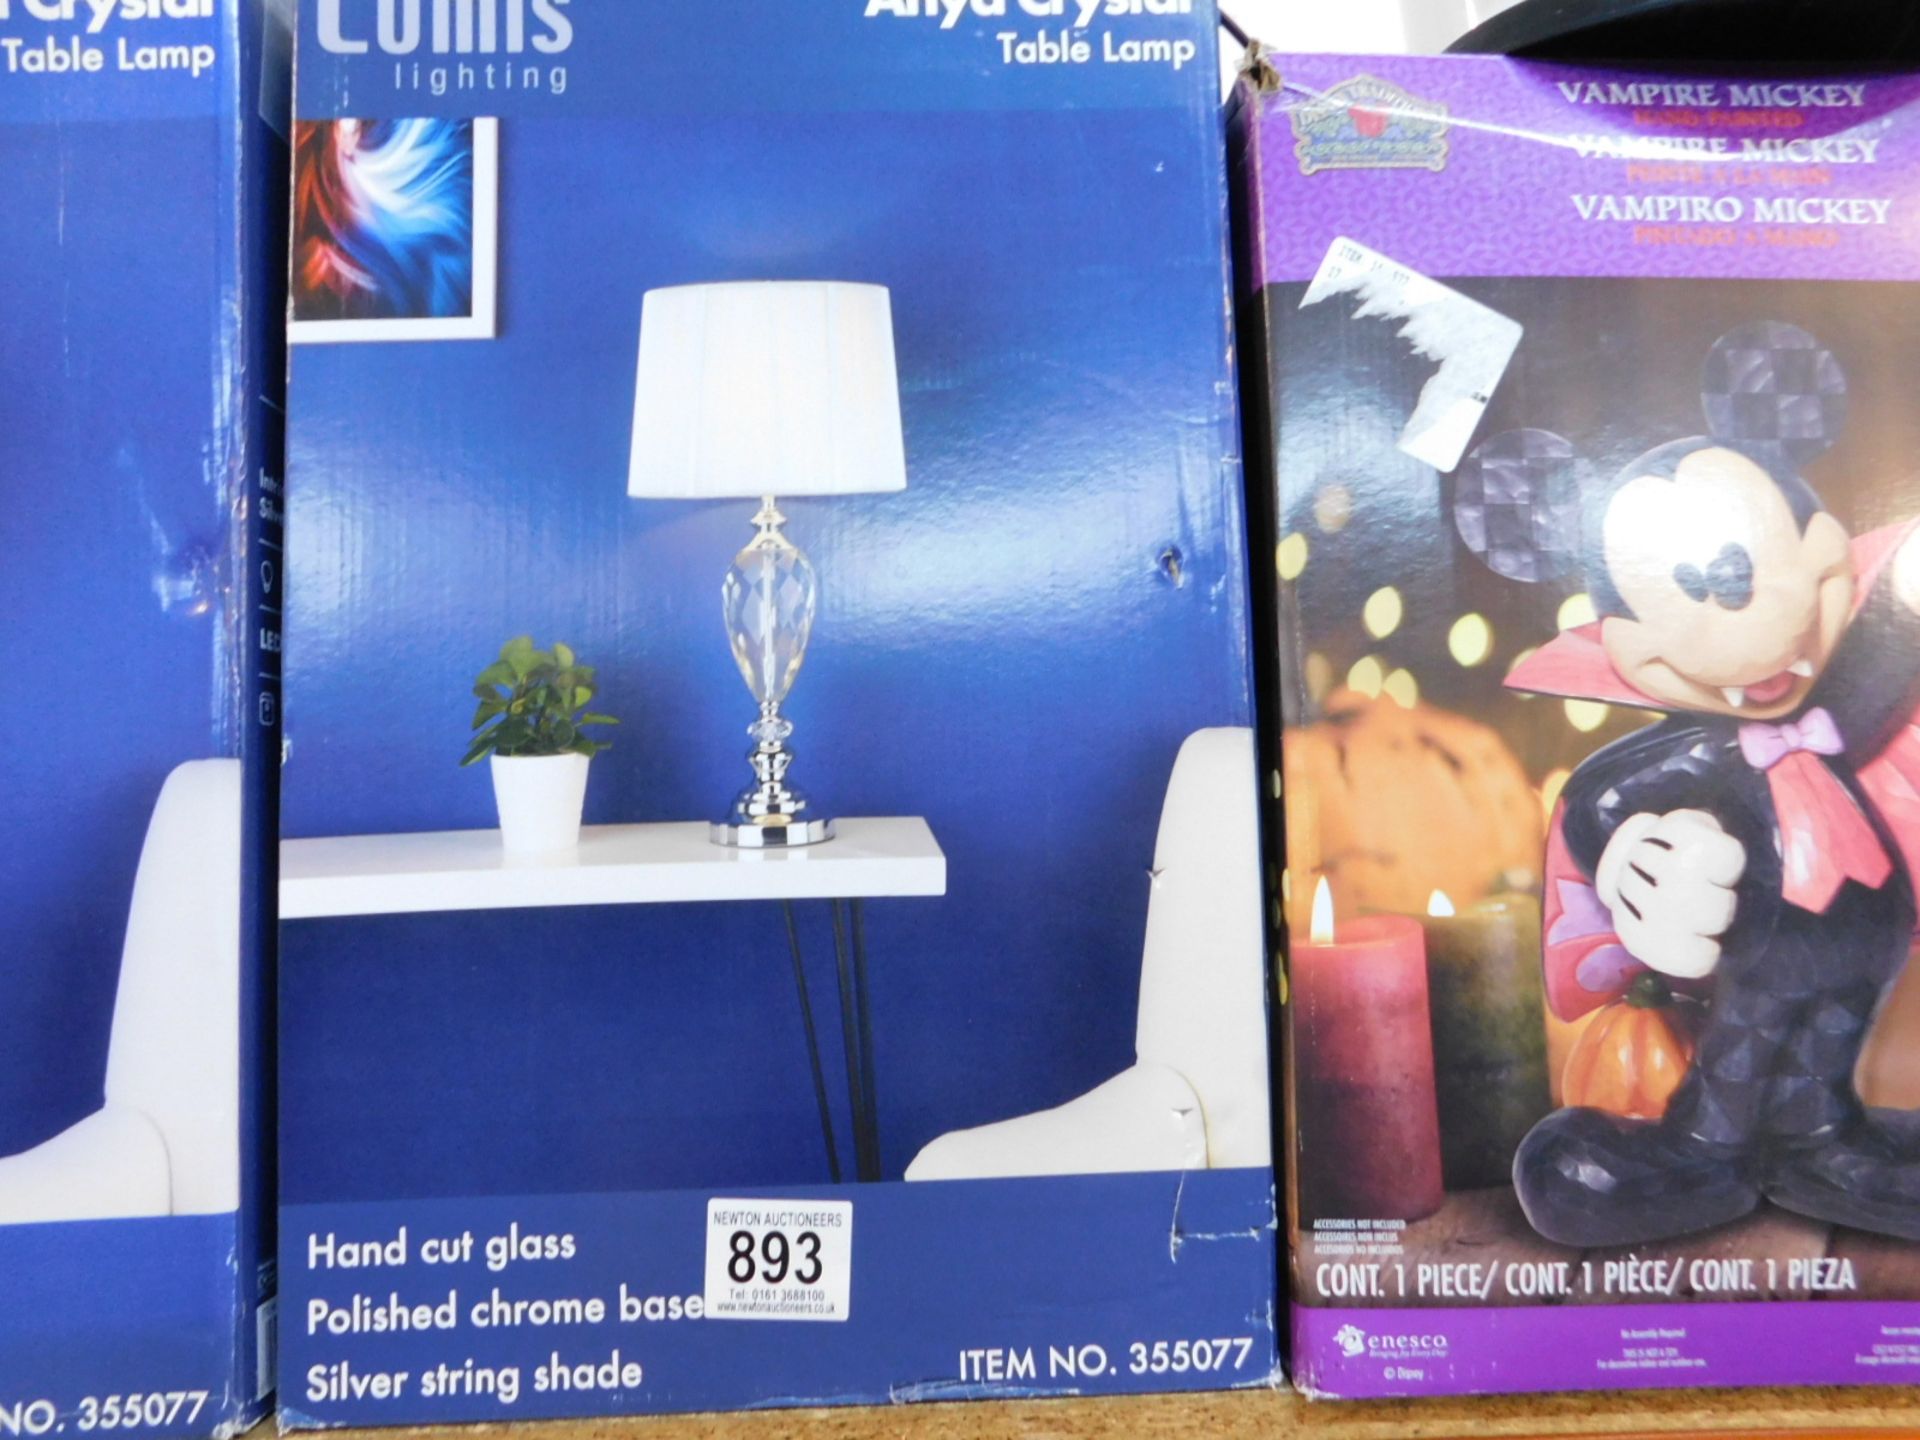 1 BOXED LUMIS ANYA CRYSTAL TABLE LAMP WITH FABRIC SHADE RRP Â£66.99